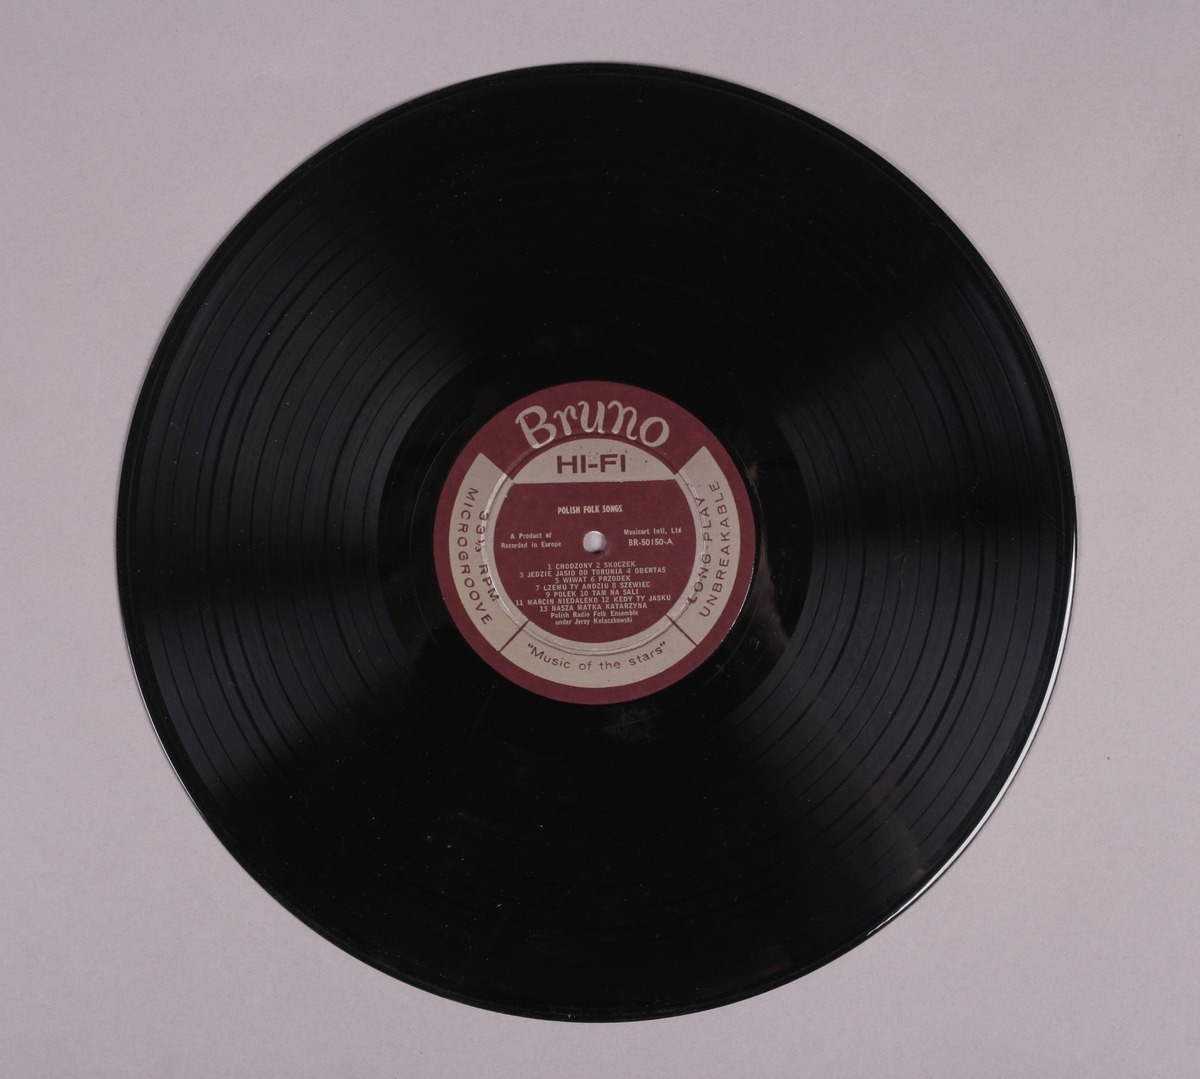 Grammofonplate i svart vinyl og plateomslag i tykk papp. Plata ligger i en uoriginal papirlomme stemplet "Angel Records".